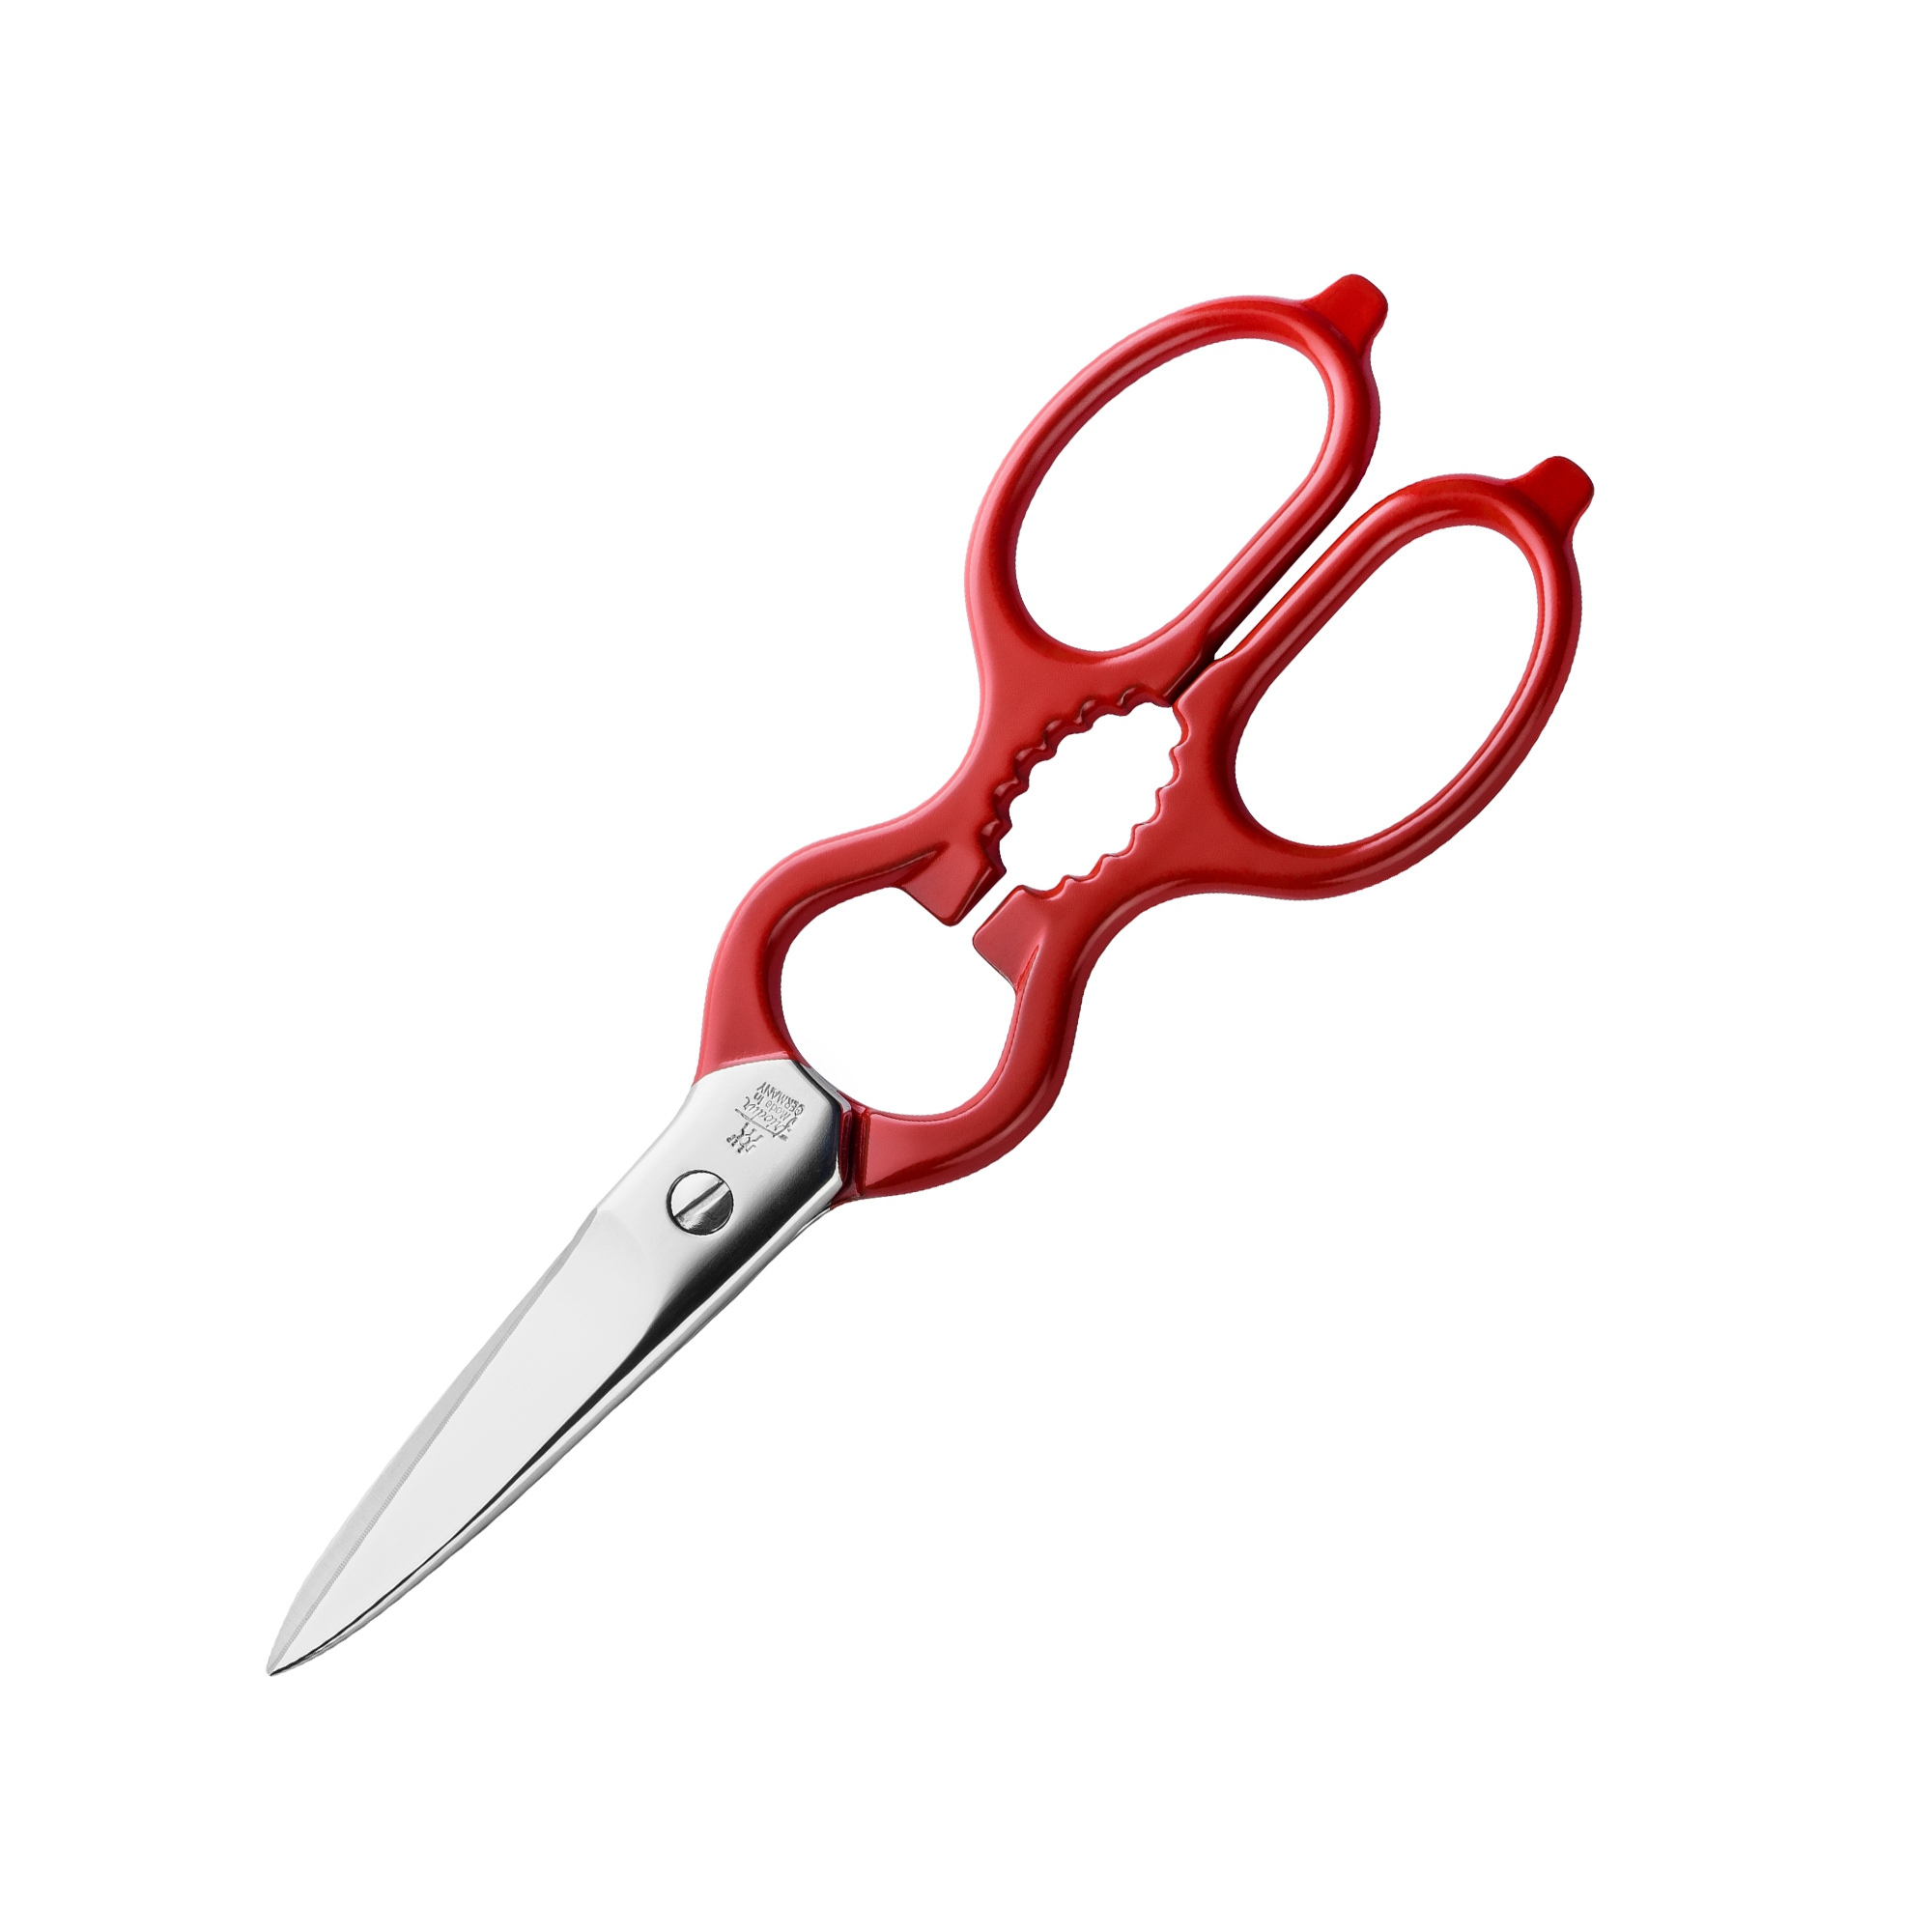 Zwilling - kitchen aid - multi-purpose scissors red - 20 cm